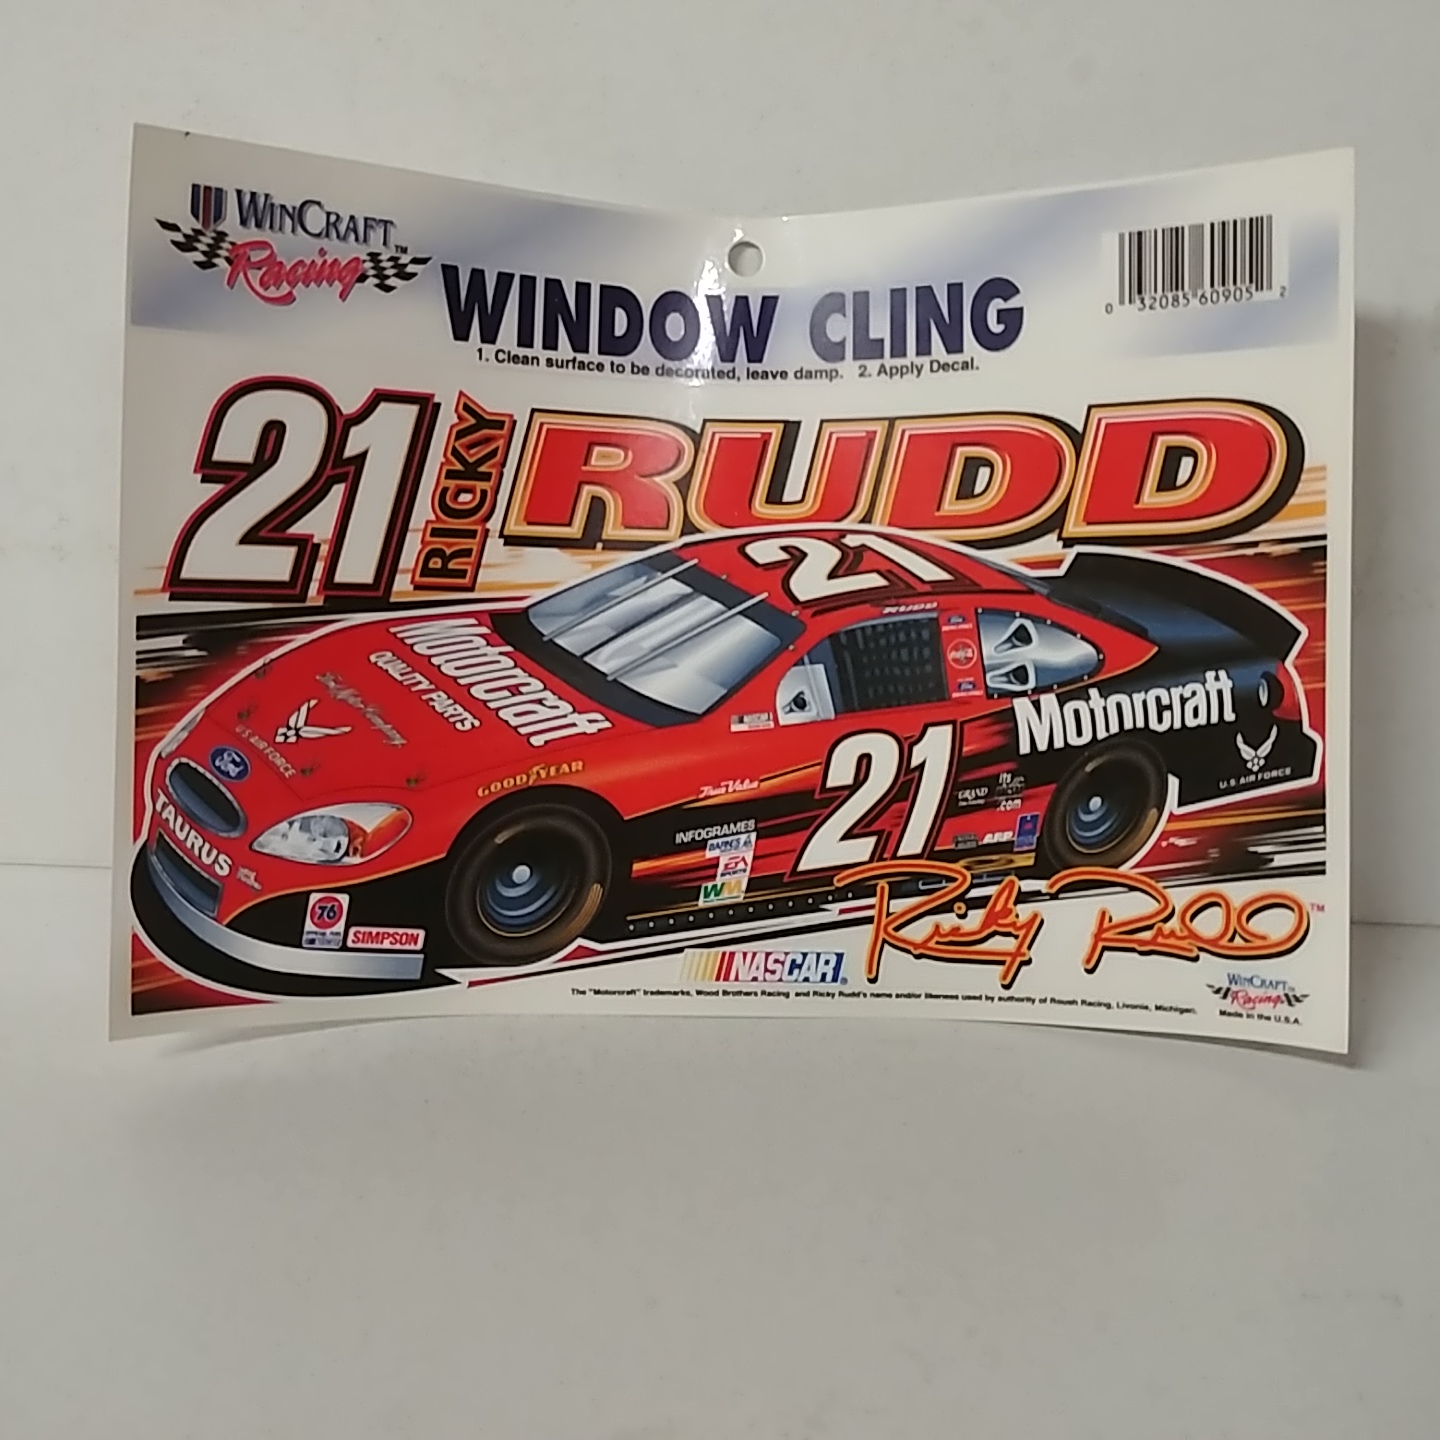 2003 Ricky Rudd Motorcraft window cling